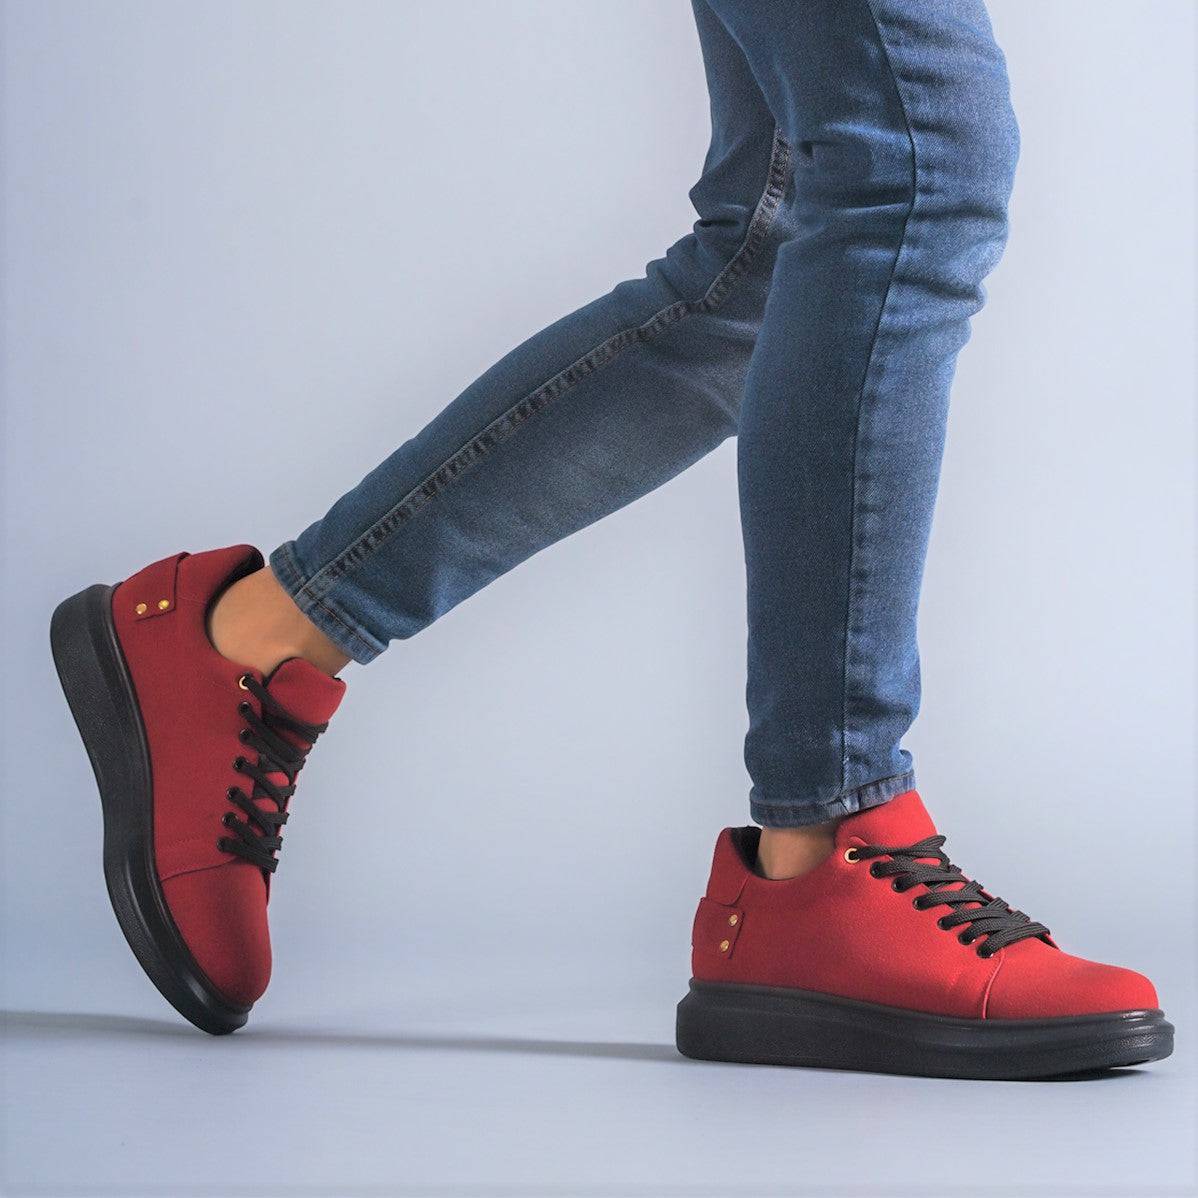 Men's Low Top Casual Sneakers by Apollo Moda | Leo Bordeaux Bliss